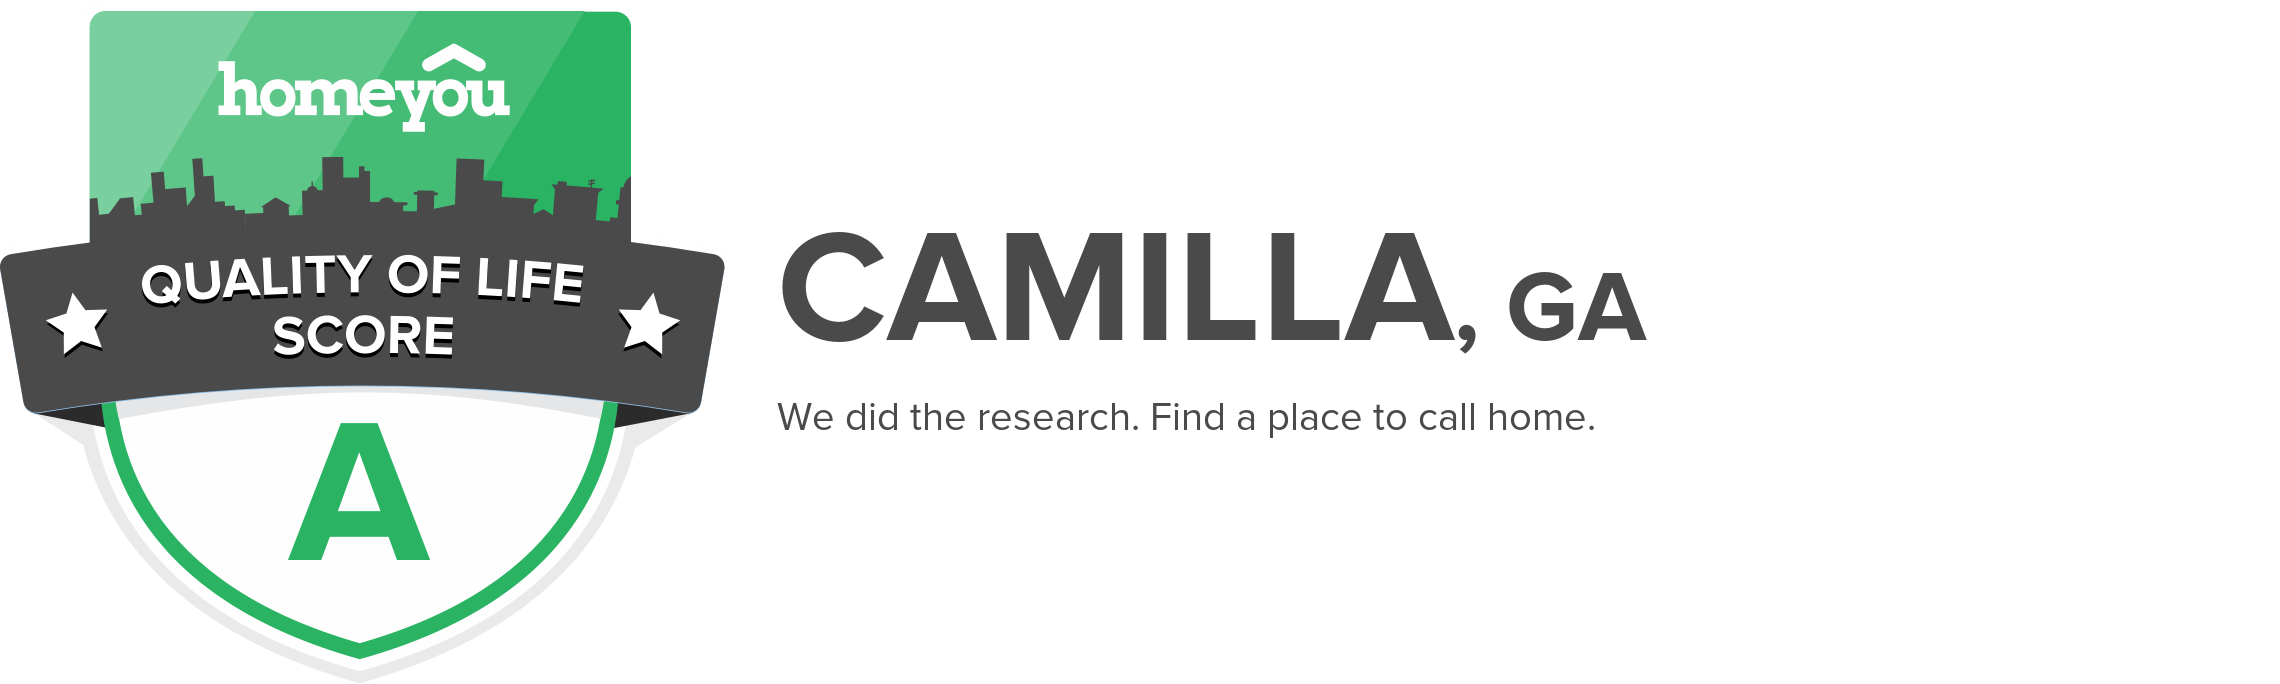 Camilla, GA